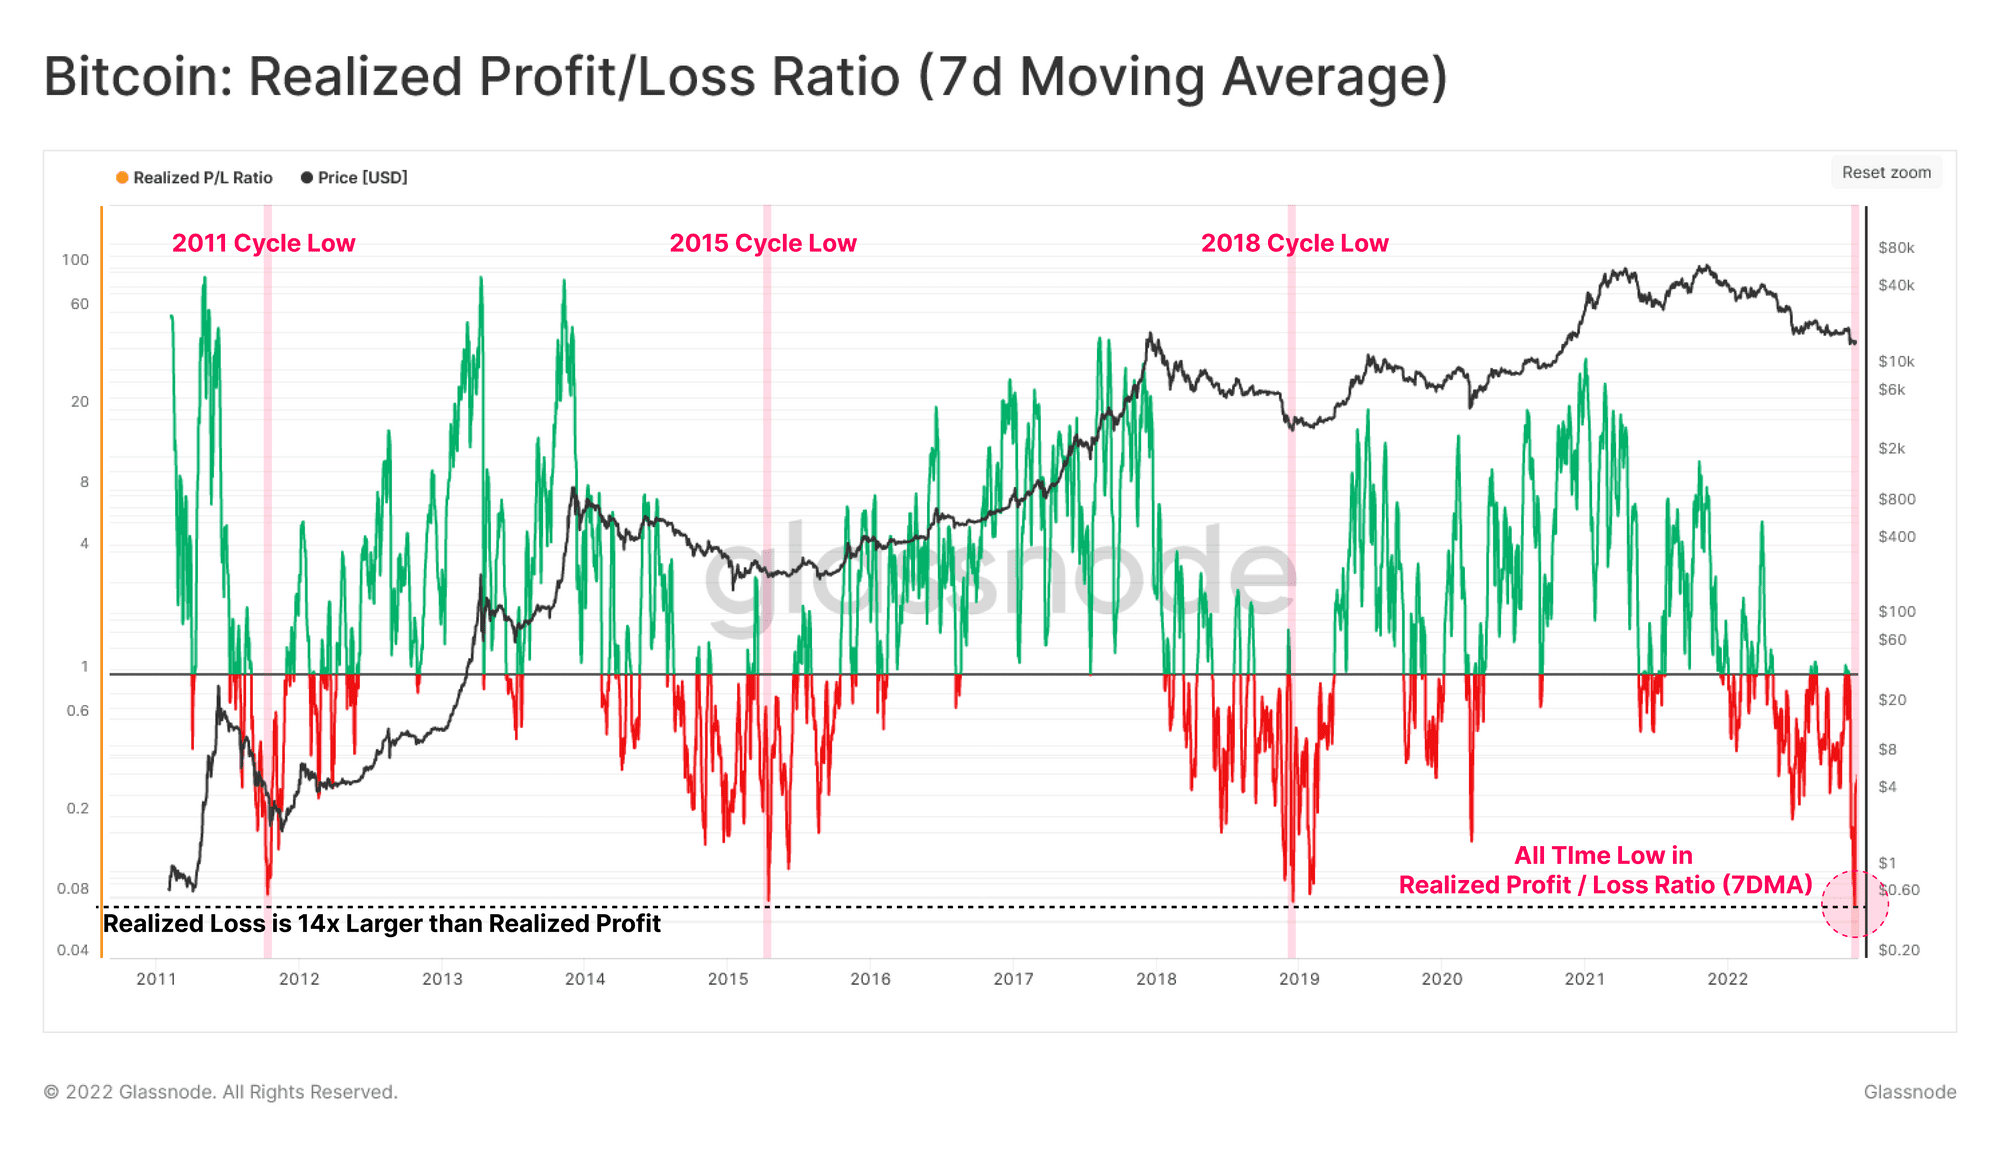 Bitcoin Realized Profit/Loss Ratio